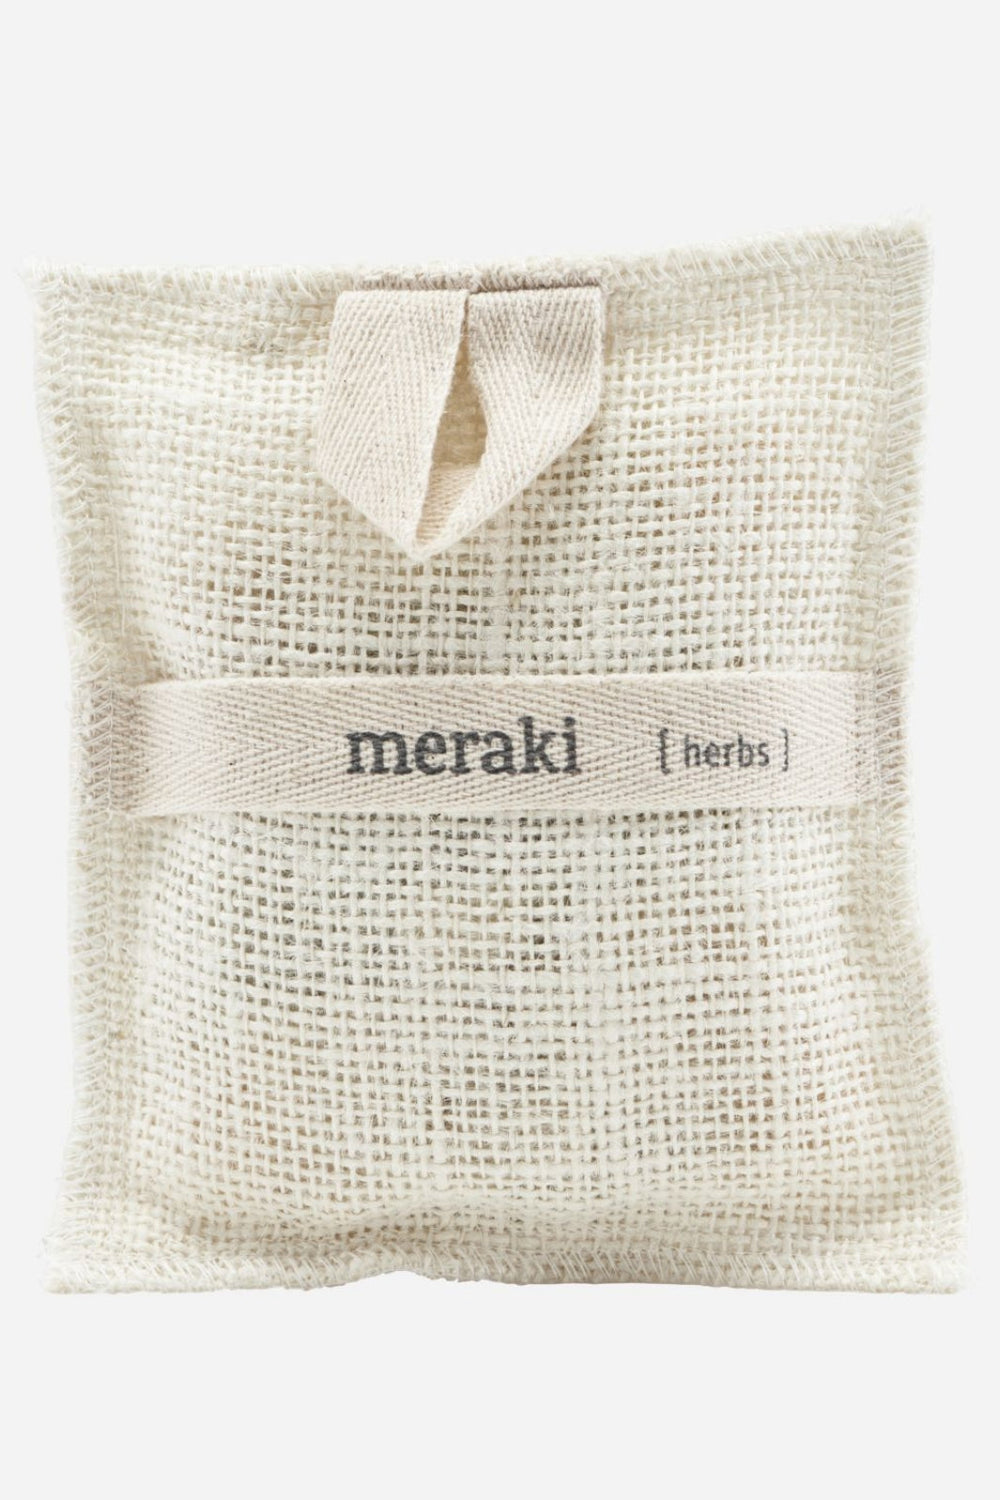 Meraki - Bath Mitt - Herbs Bad 